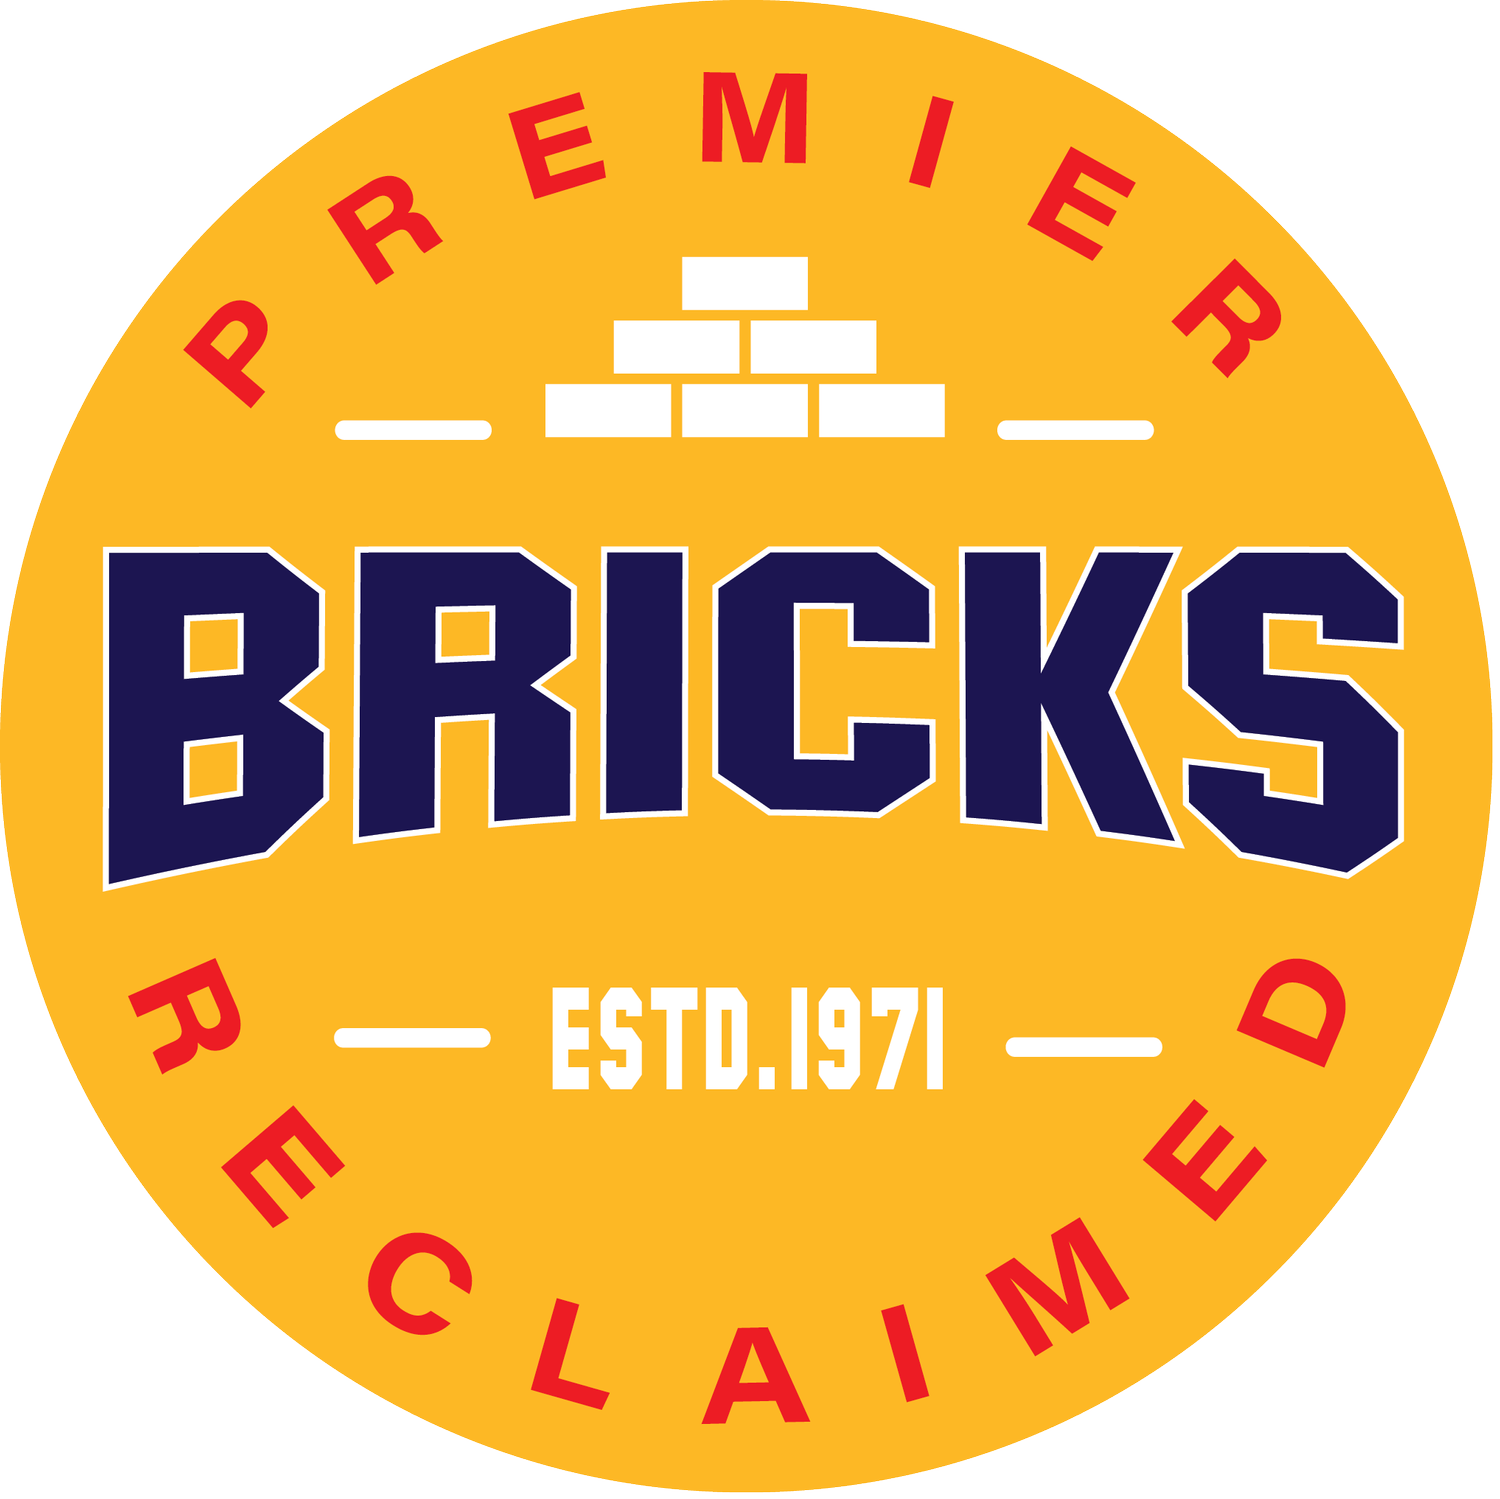 Premier Reclaimed Bricks, London